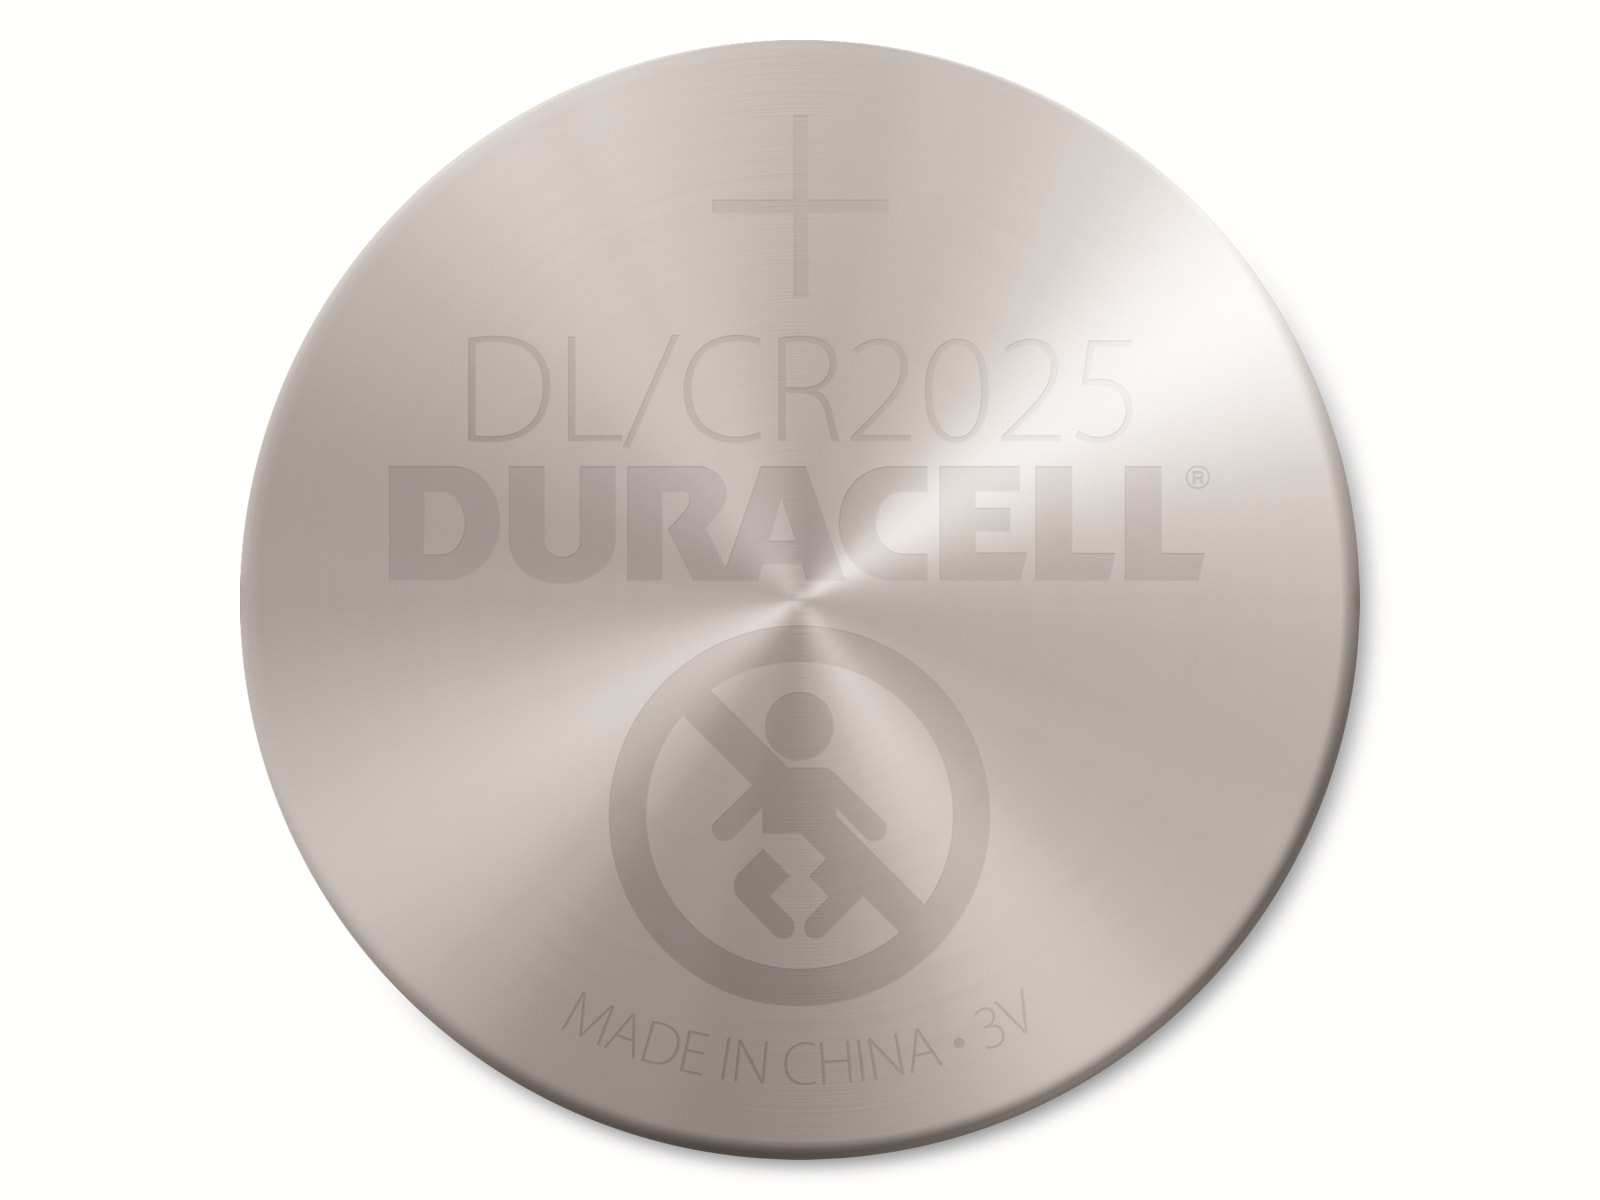 DURACELL Lithium-Knopfzelle CR2025, 3V, Electronics, 2 Stück